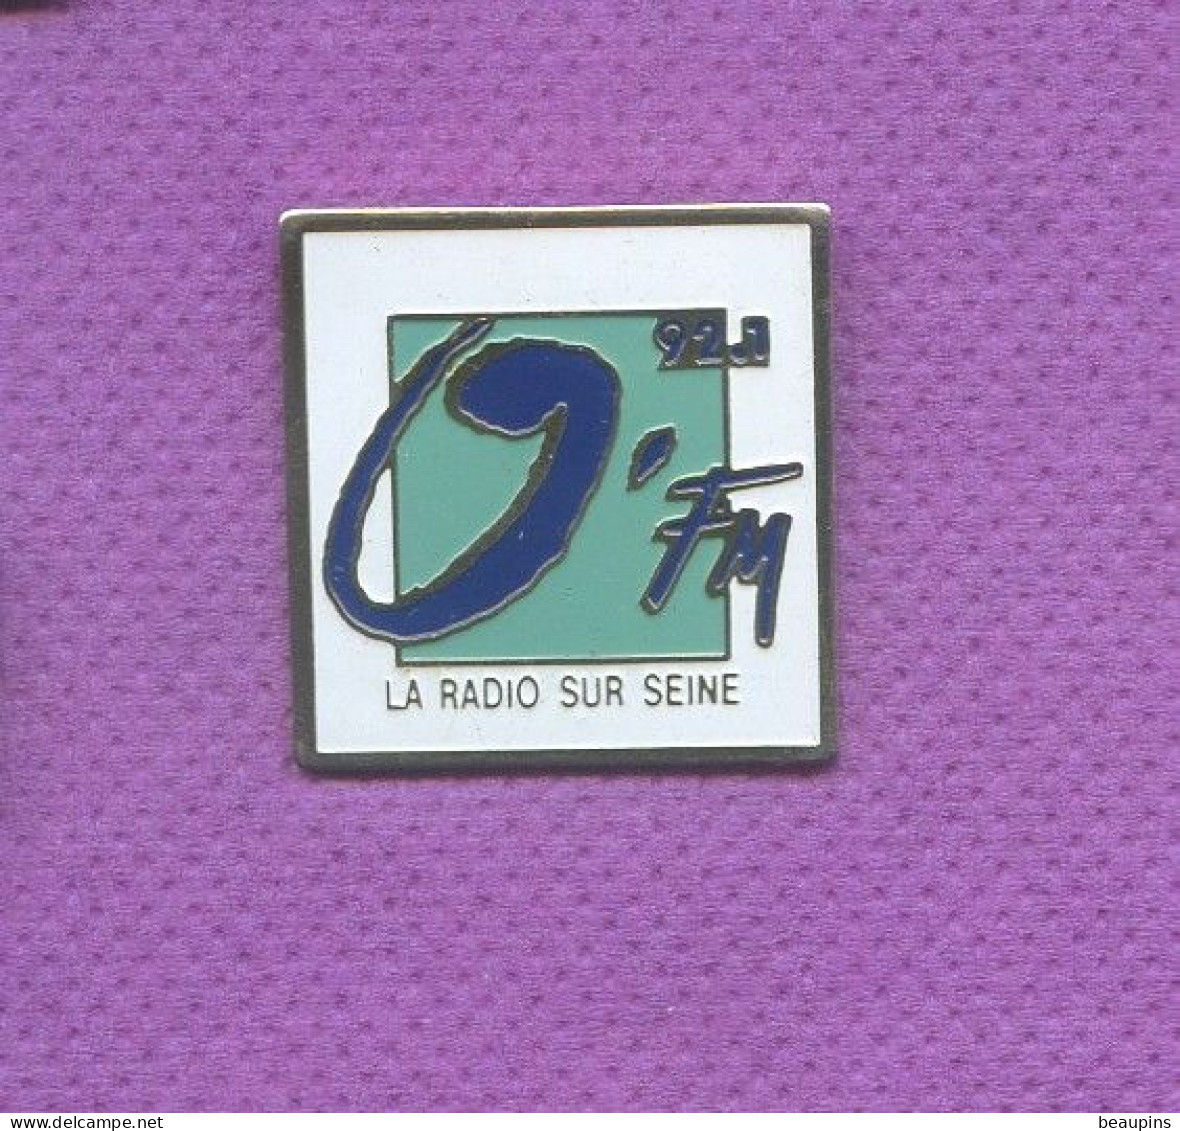 Rare Pins Media O Fm La Radio Sur Seine L148 - Medien